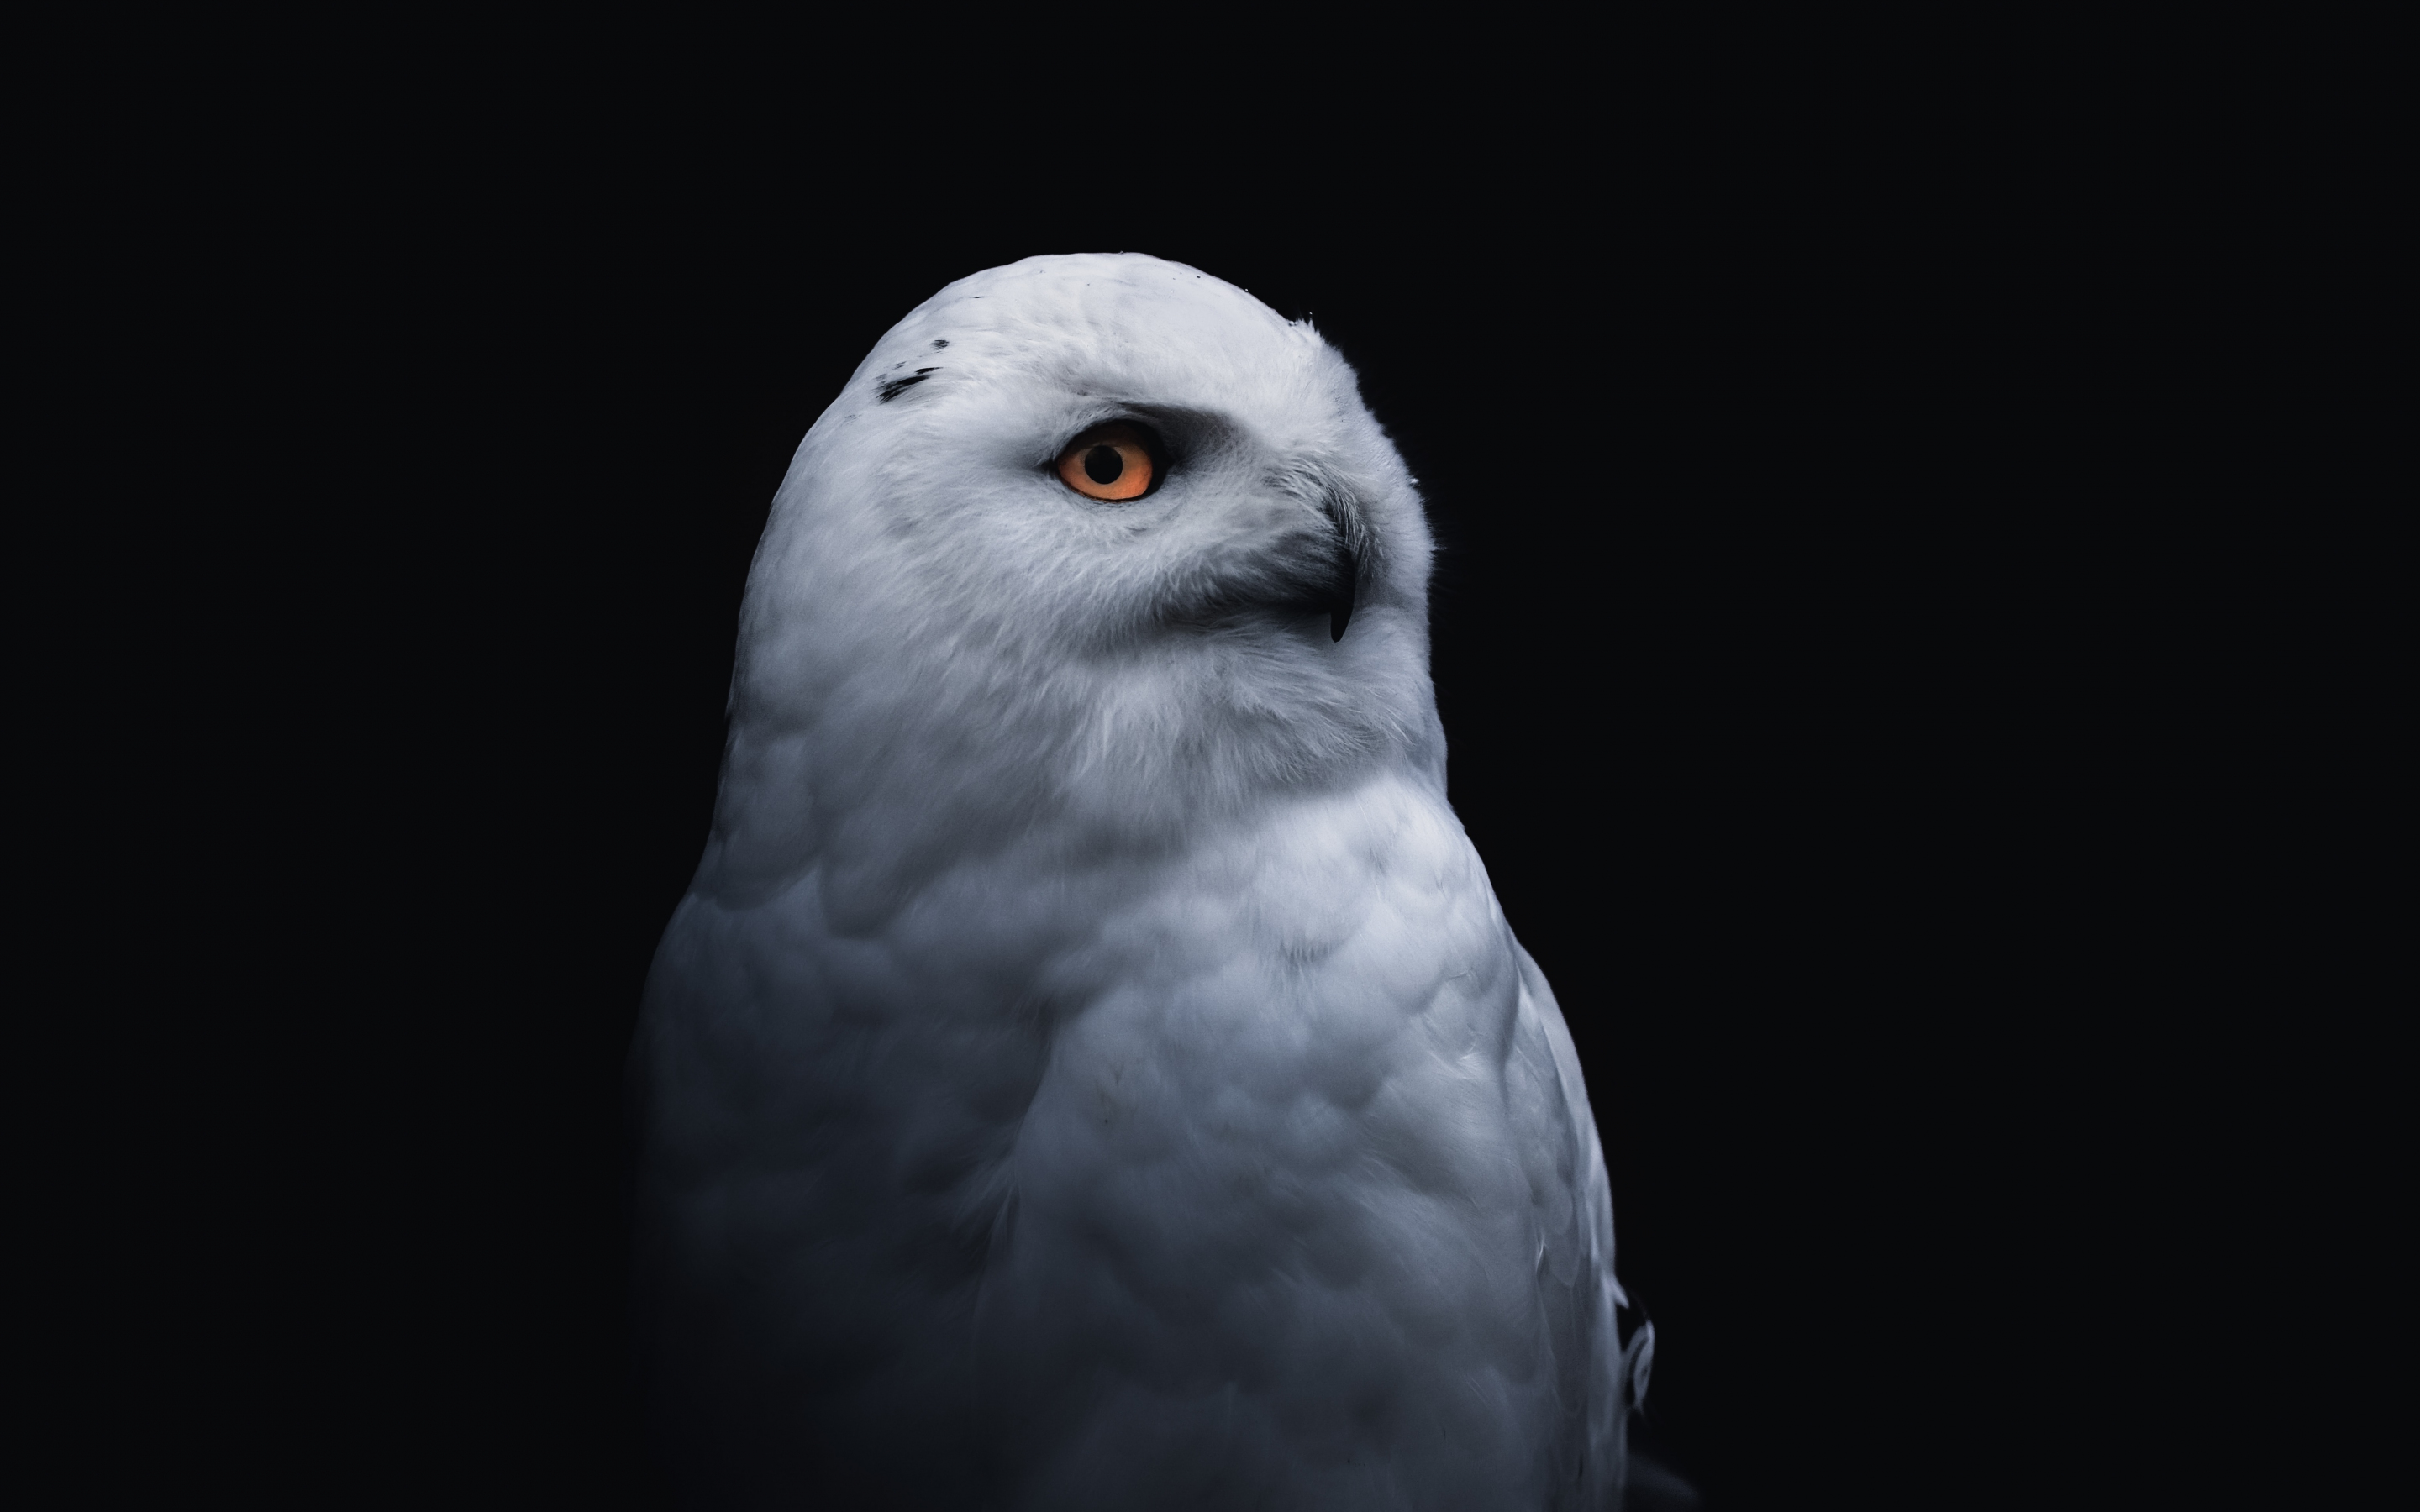 Yellow eye bird, white owl, 2880x1800 wallpaper